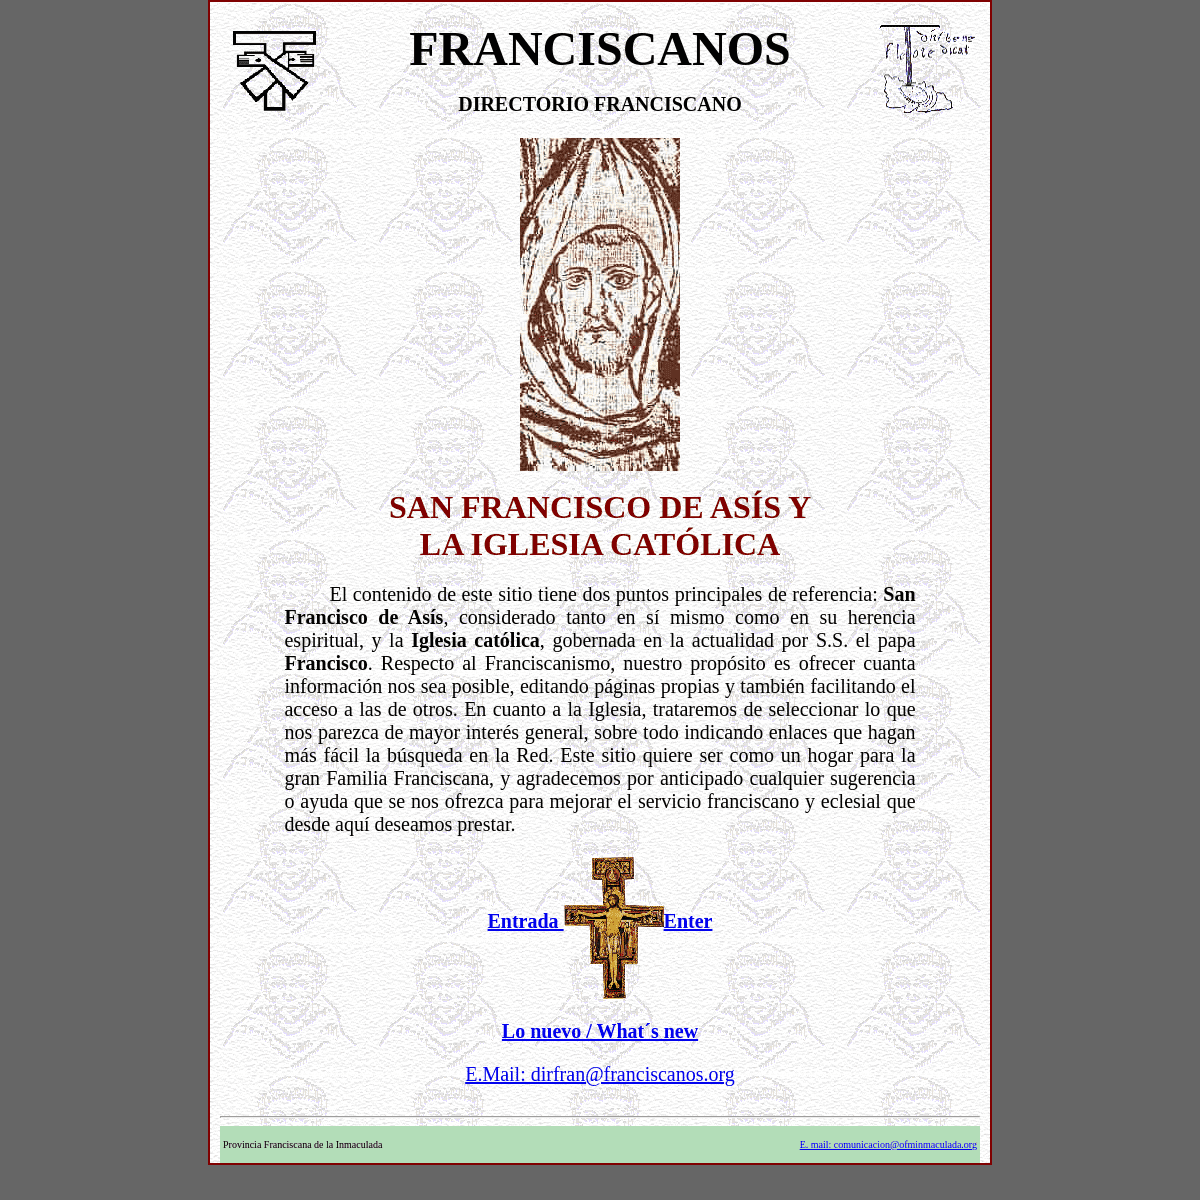 A complete backup of https://franciscanos.org